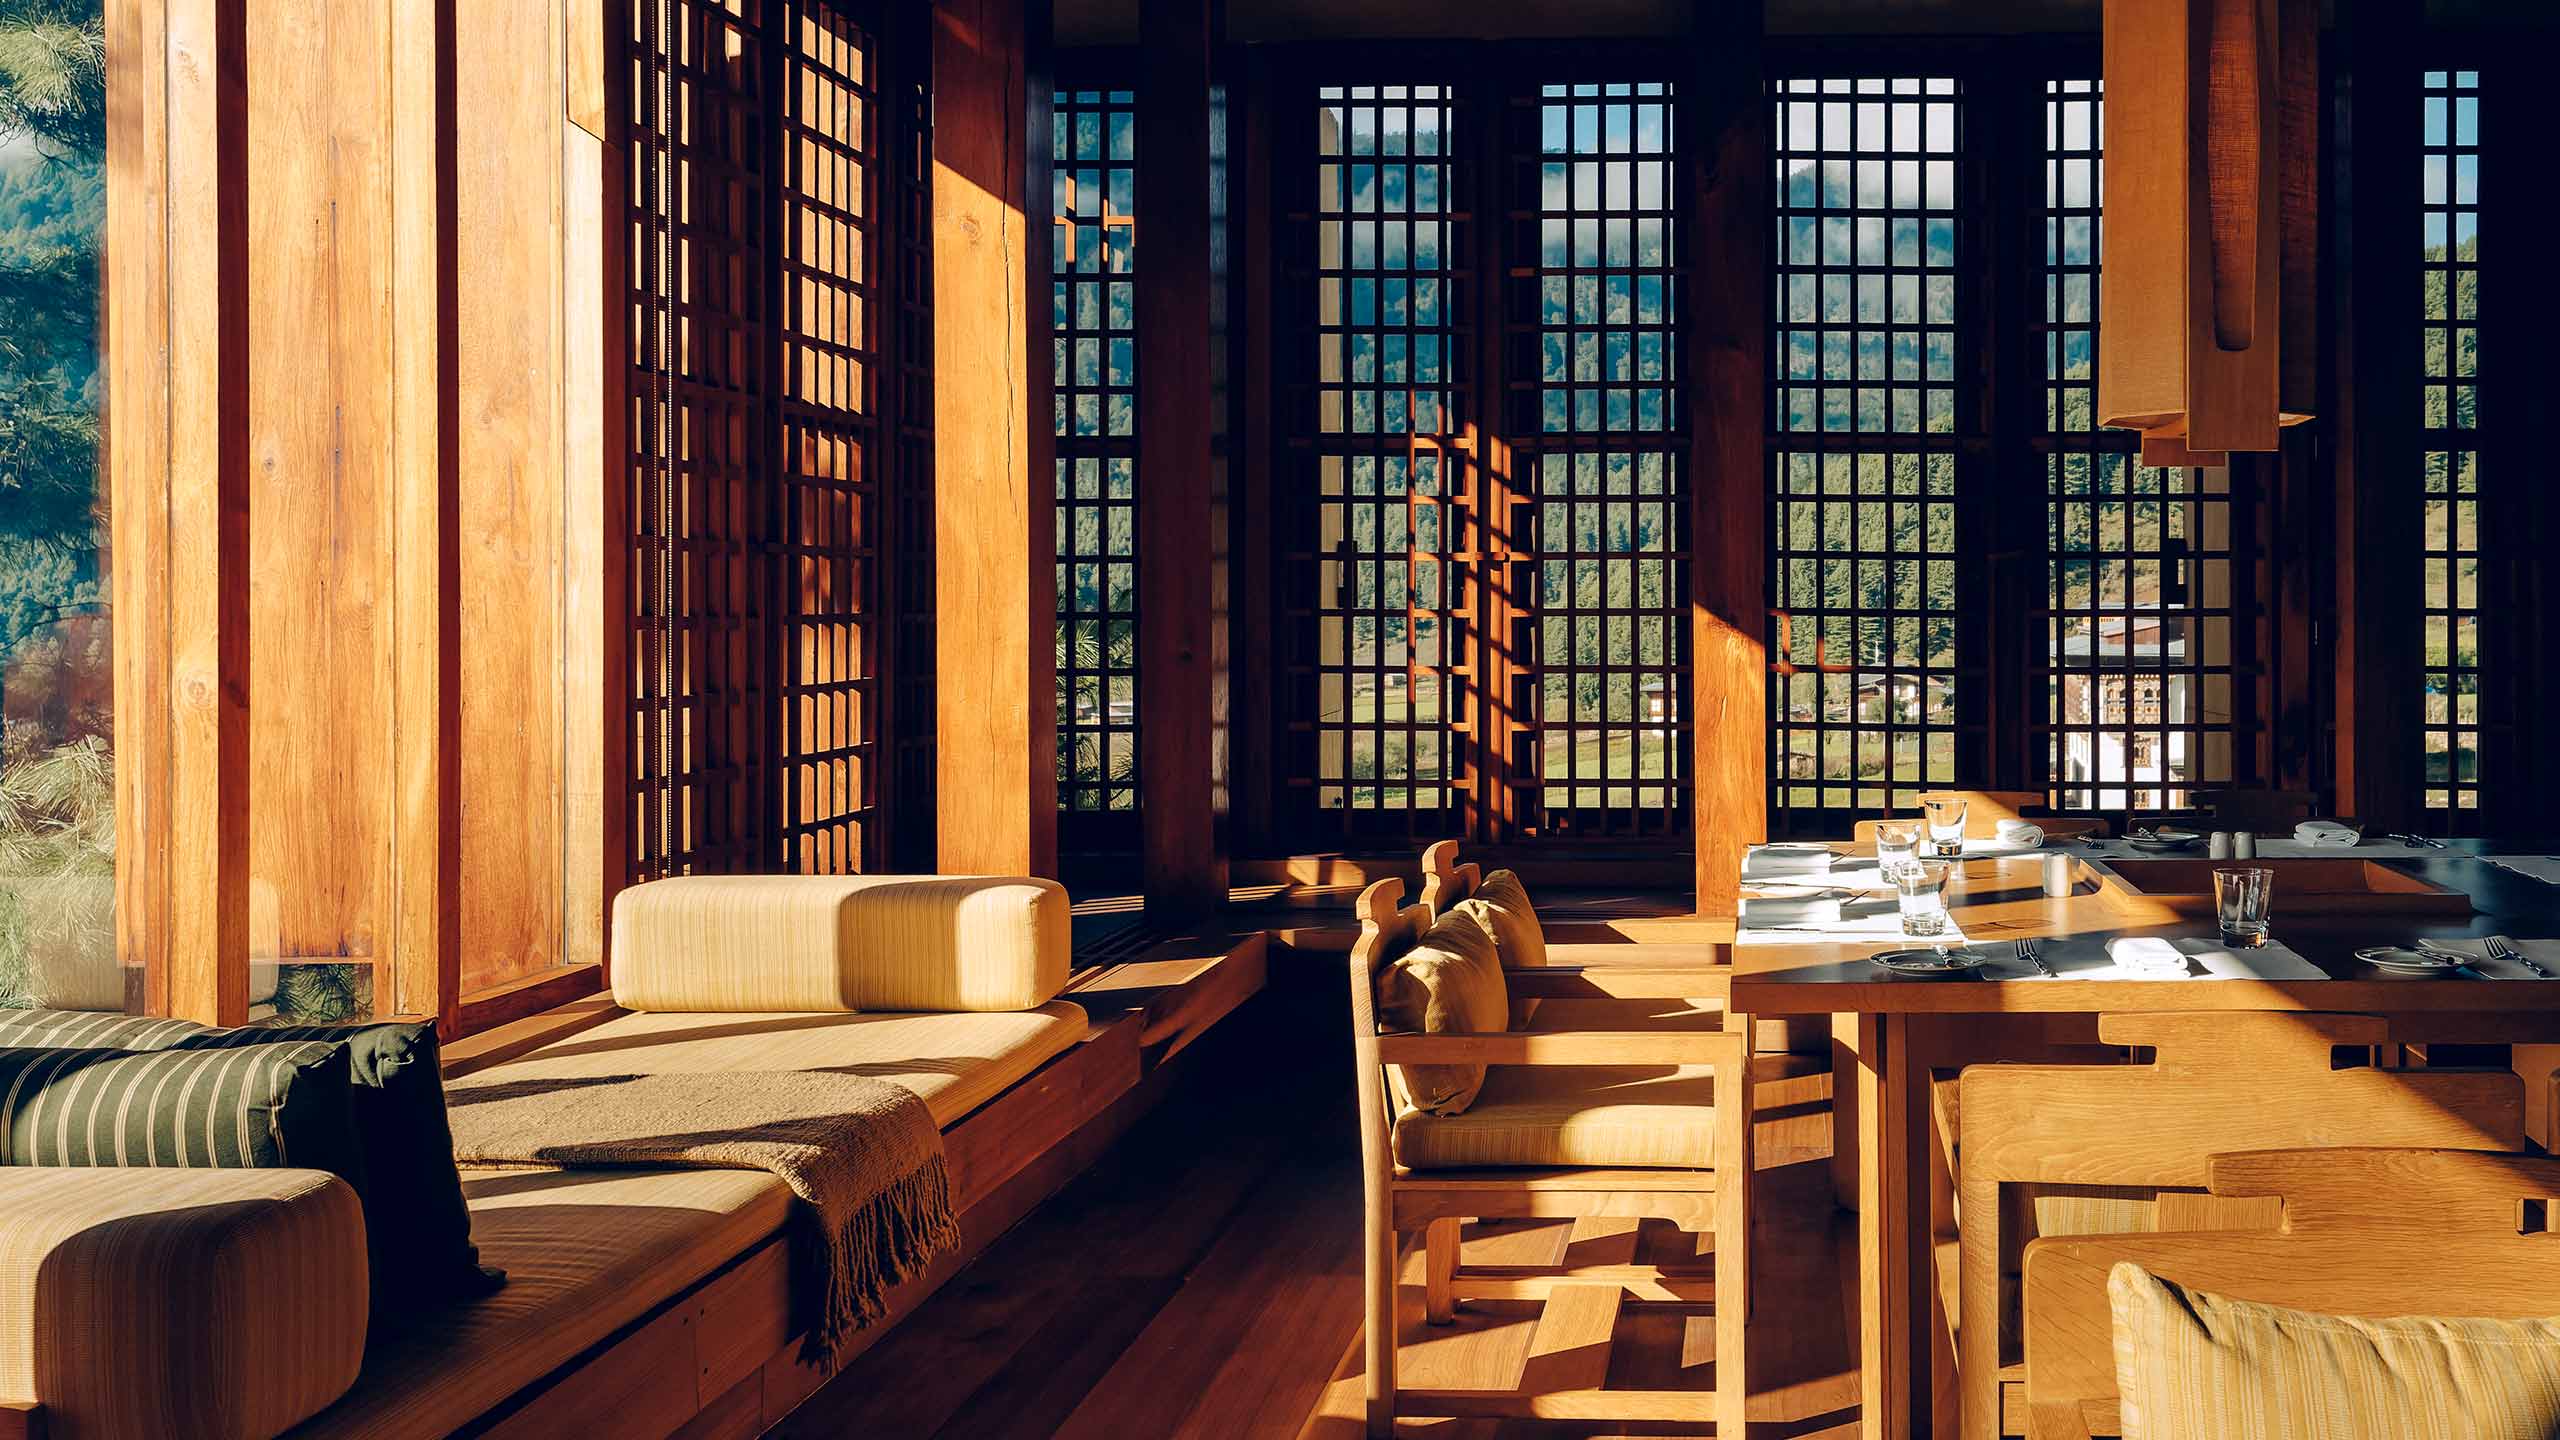 amankora-bhutan-gangtey-dining-experience-lodge-dining-room